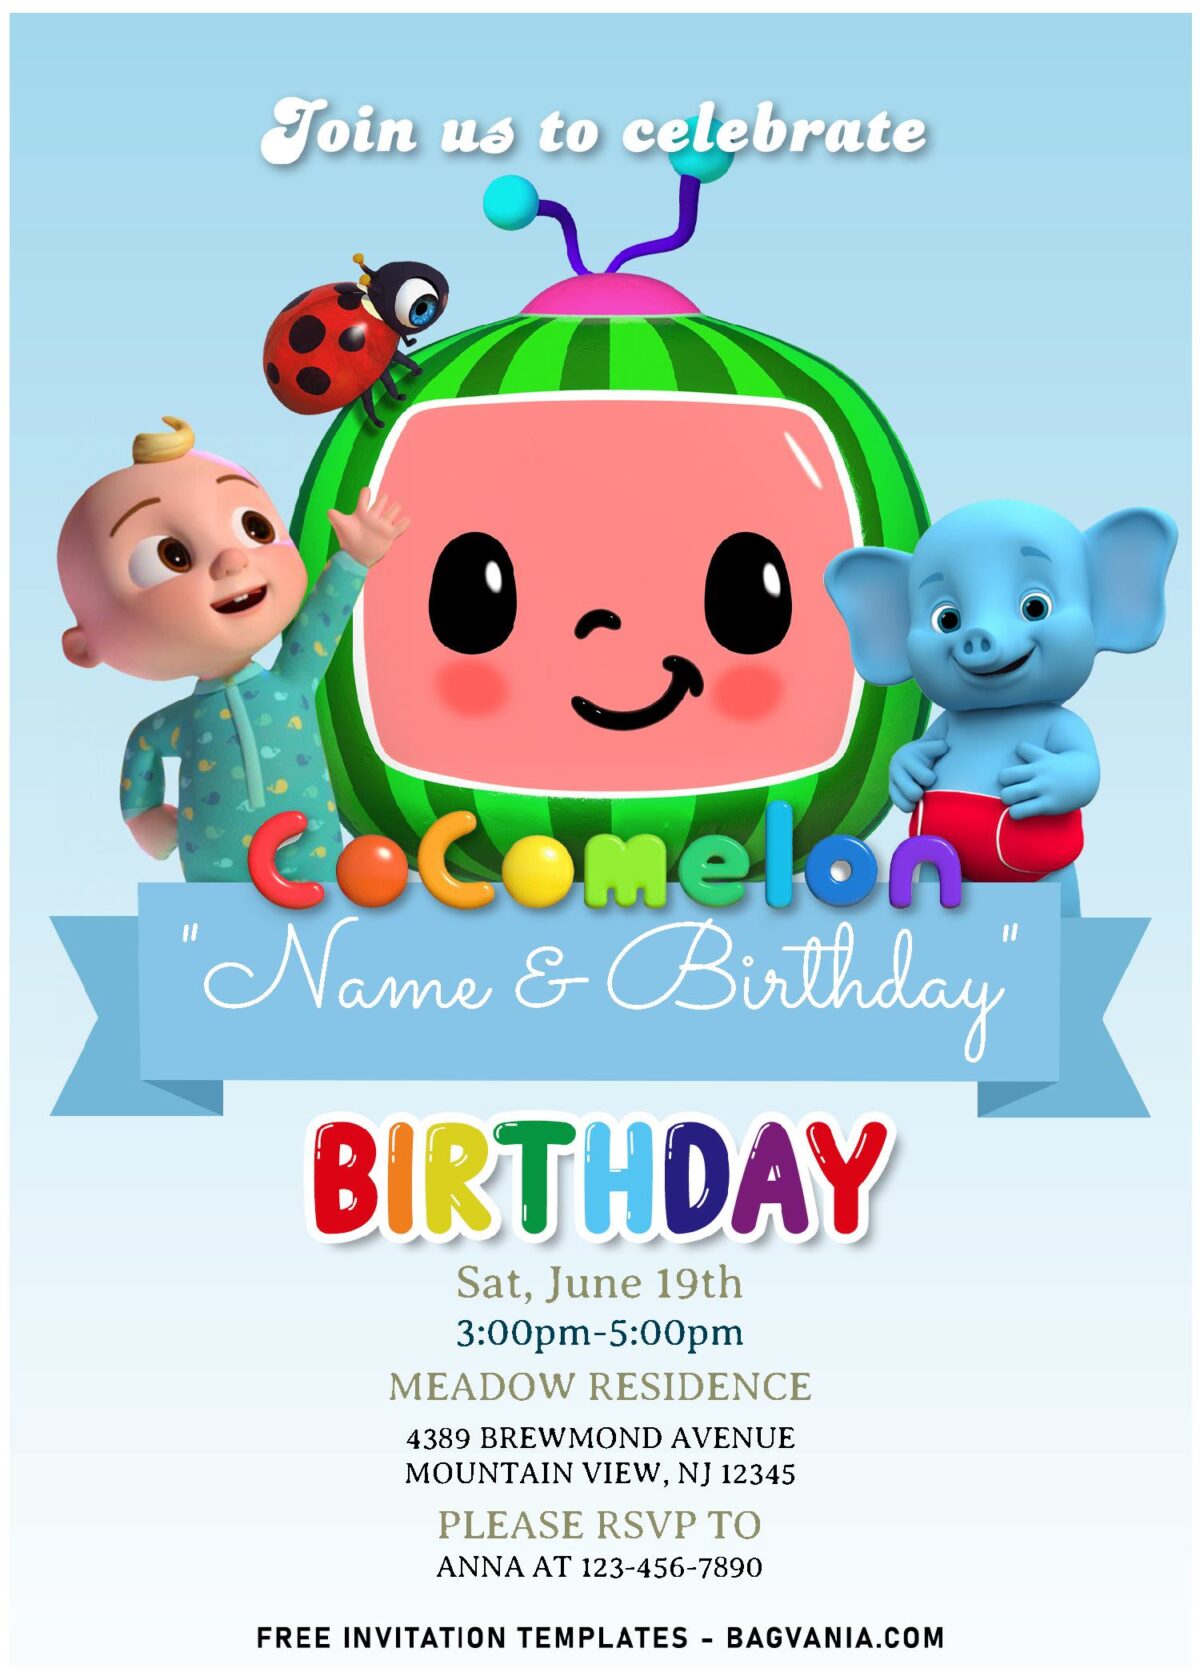 (Free Editable PDF) Bright & Cheerful Cocomelon Birthday Invitation Templates with cute baby elephant